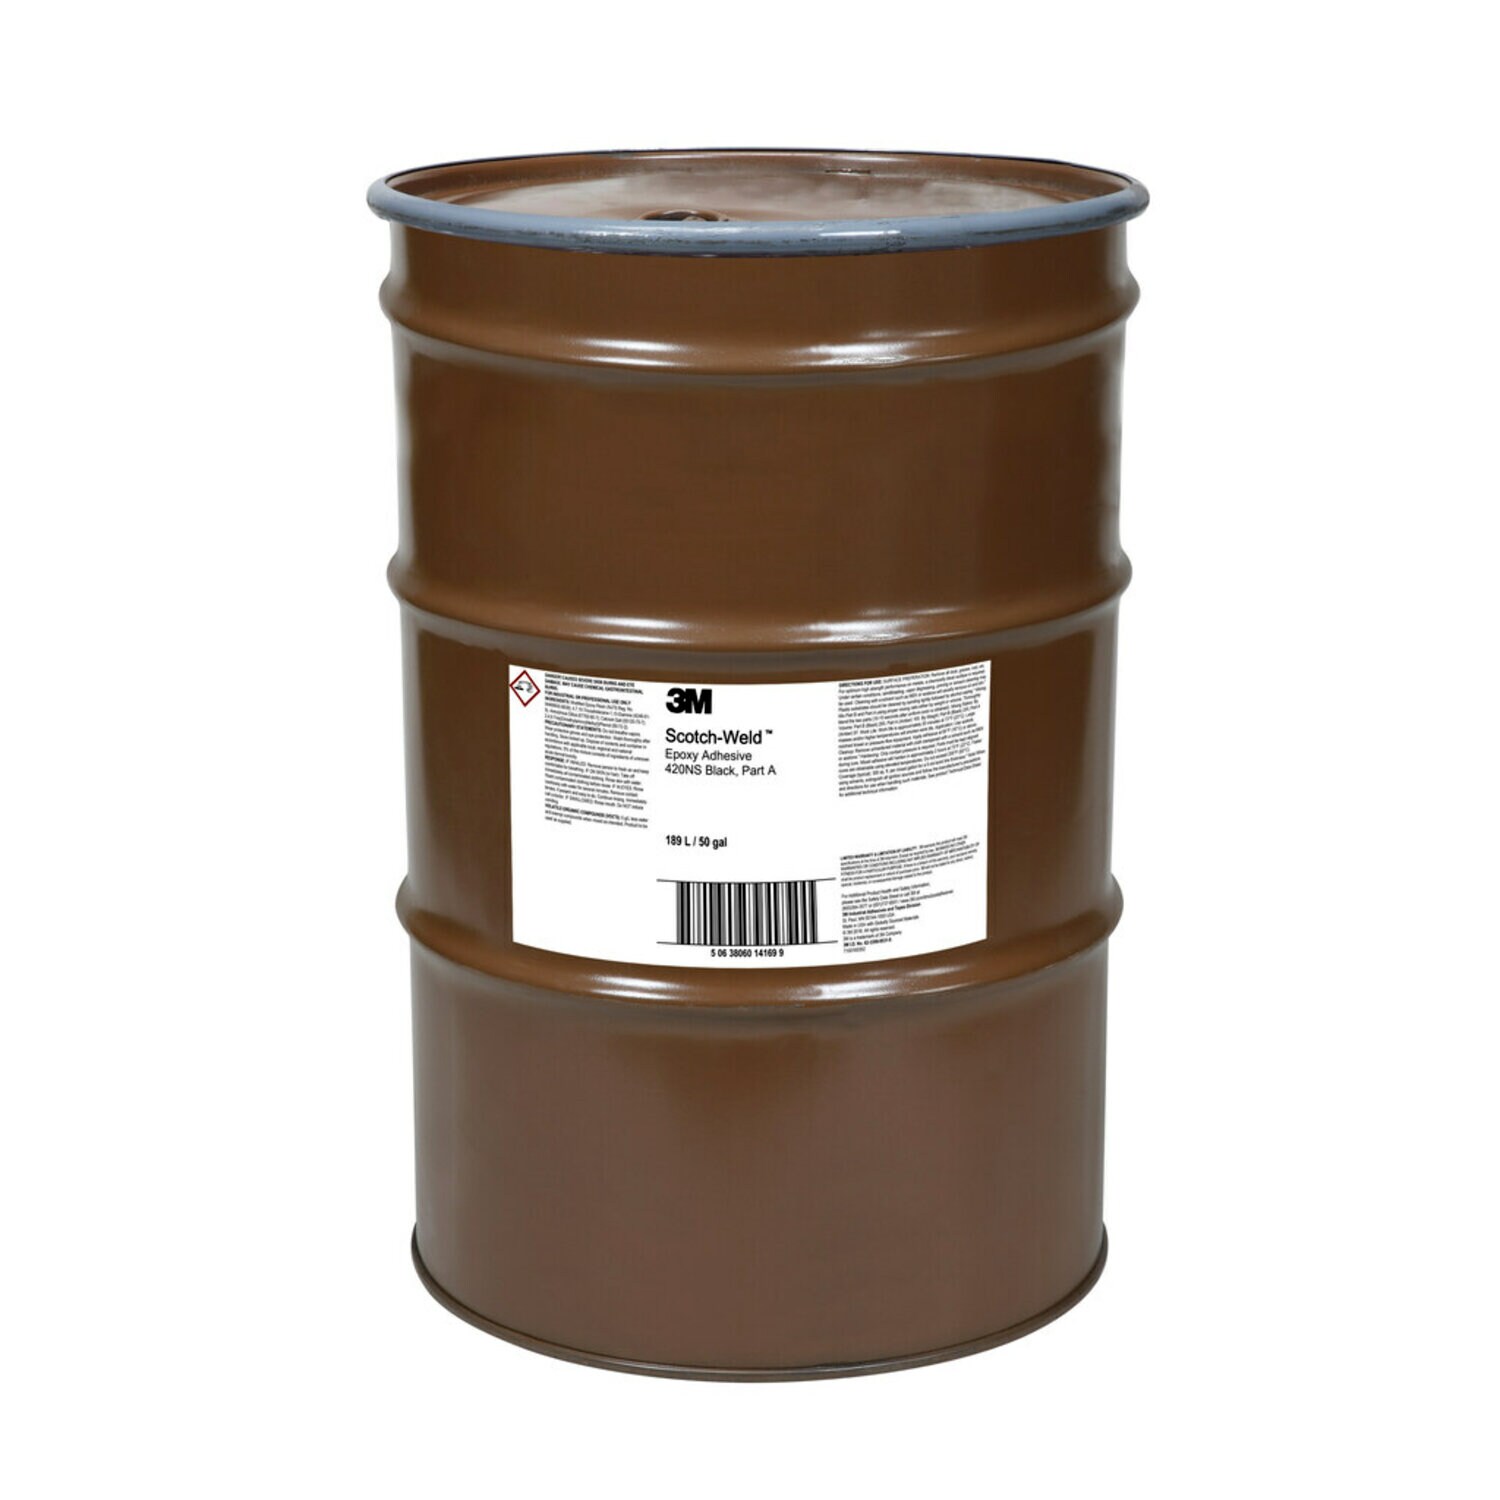 7100160352 - 3M Scotch-Weld Epoxy Adhesive 420NS, Black, Part A, 55 Gallon (50
Gallon Net), Drum